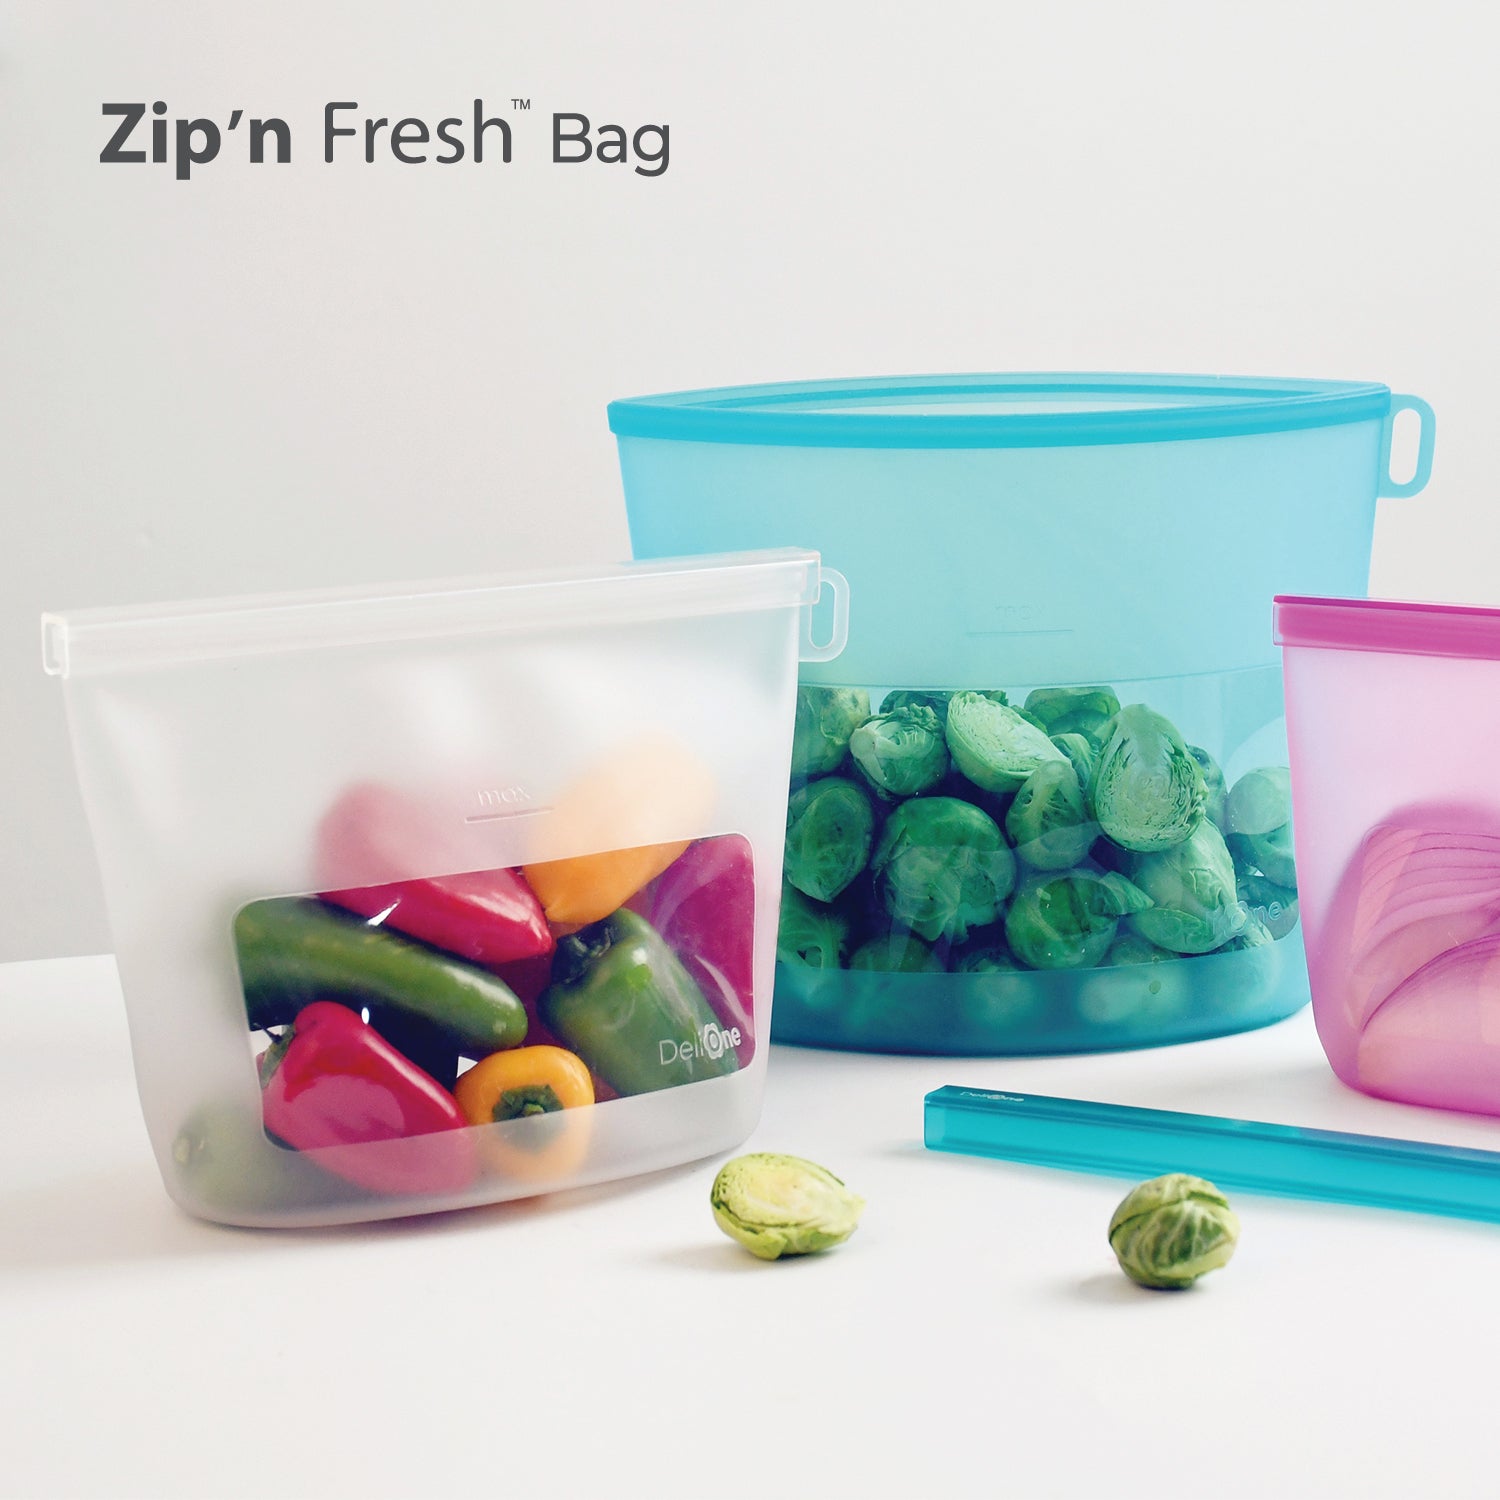 Zip n Store Ziplock Bag Organizer